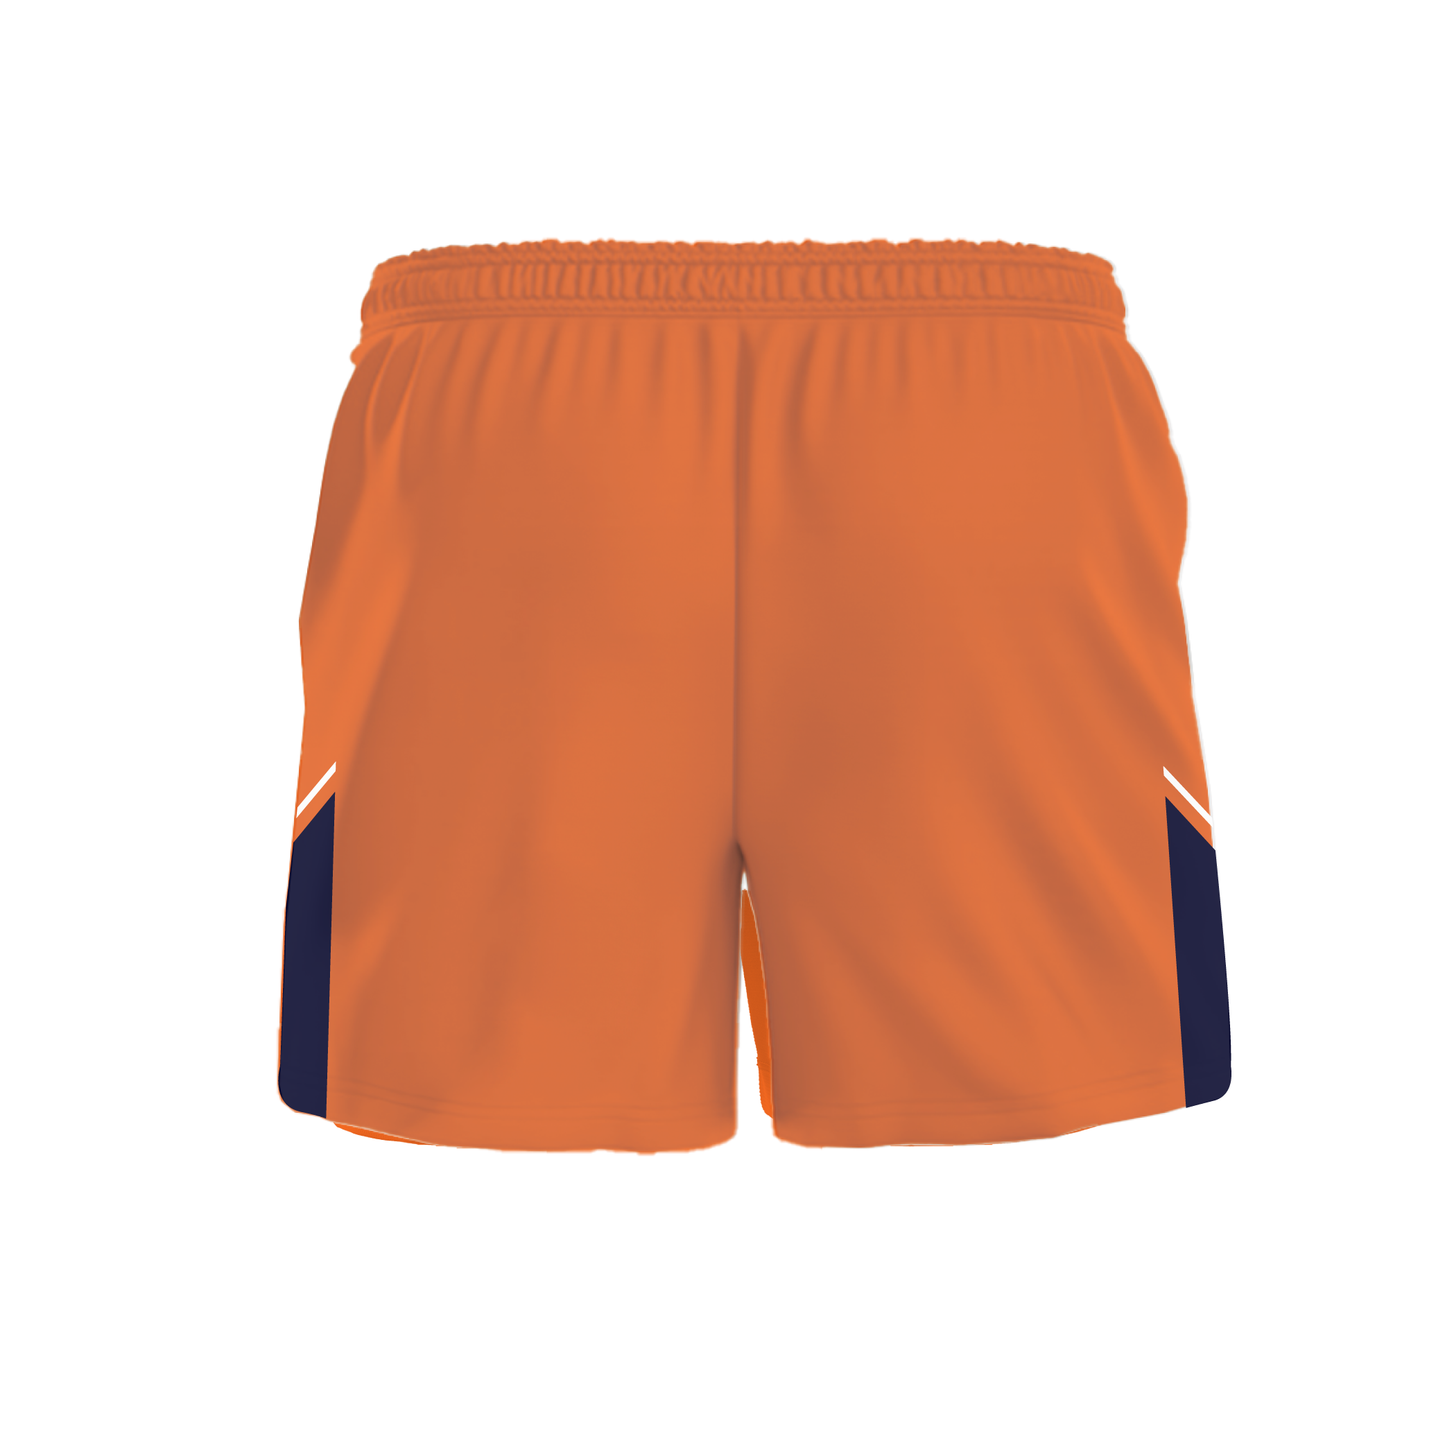 Oswego Lax - CUSTOM Women's Gym Shorts Orange